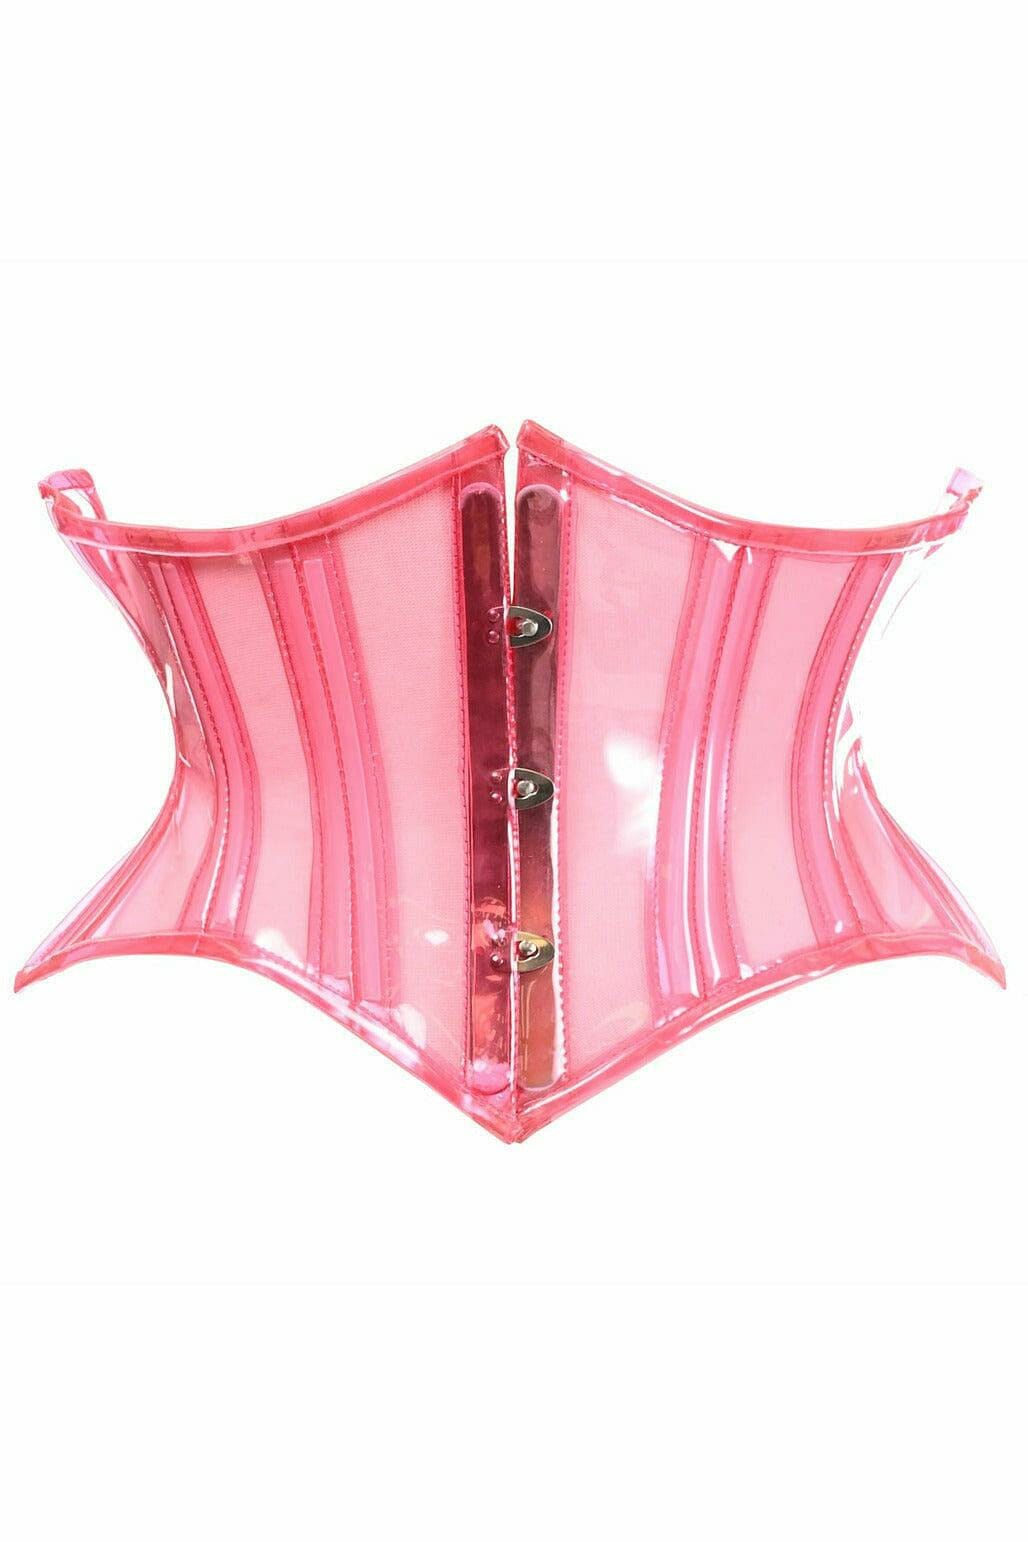 Lavish Clear Pink Curvy Cut Mini Cincher Corset-Waist Cinchers-Daisy Corsets-Clear-S-SEXYSHOES.COM